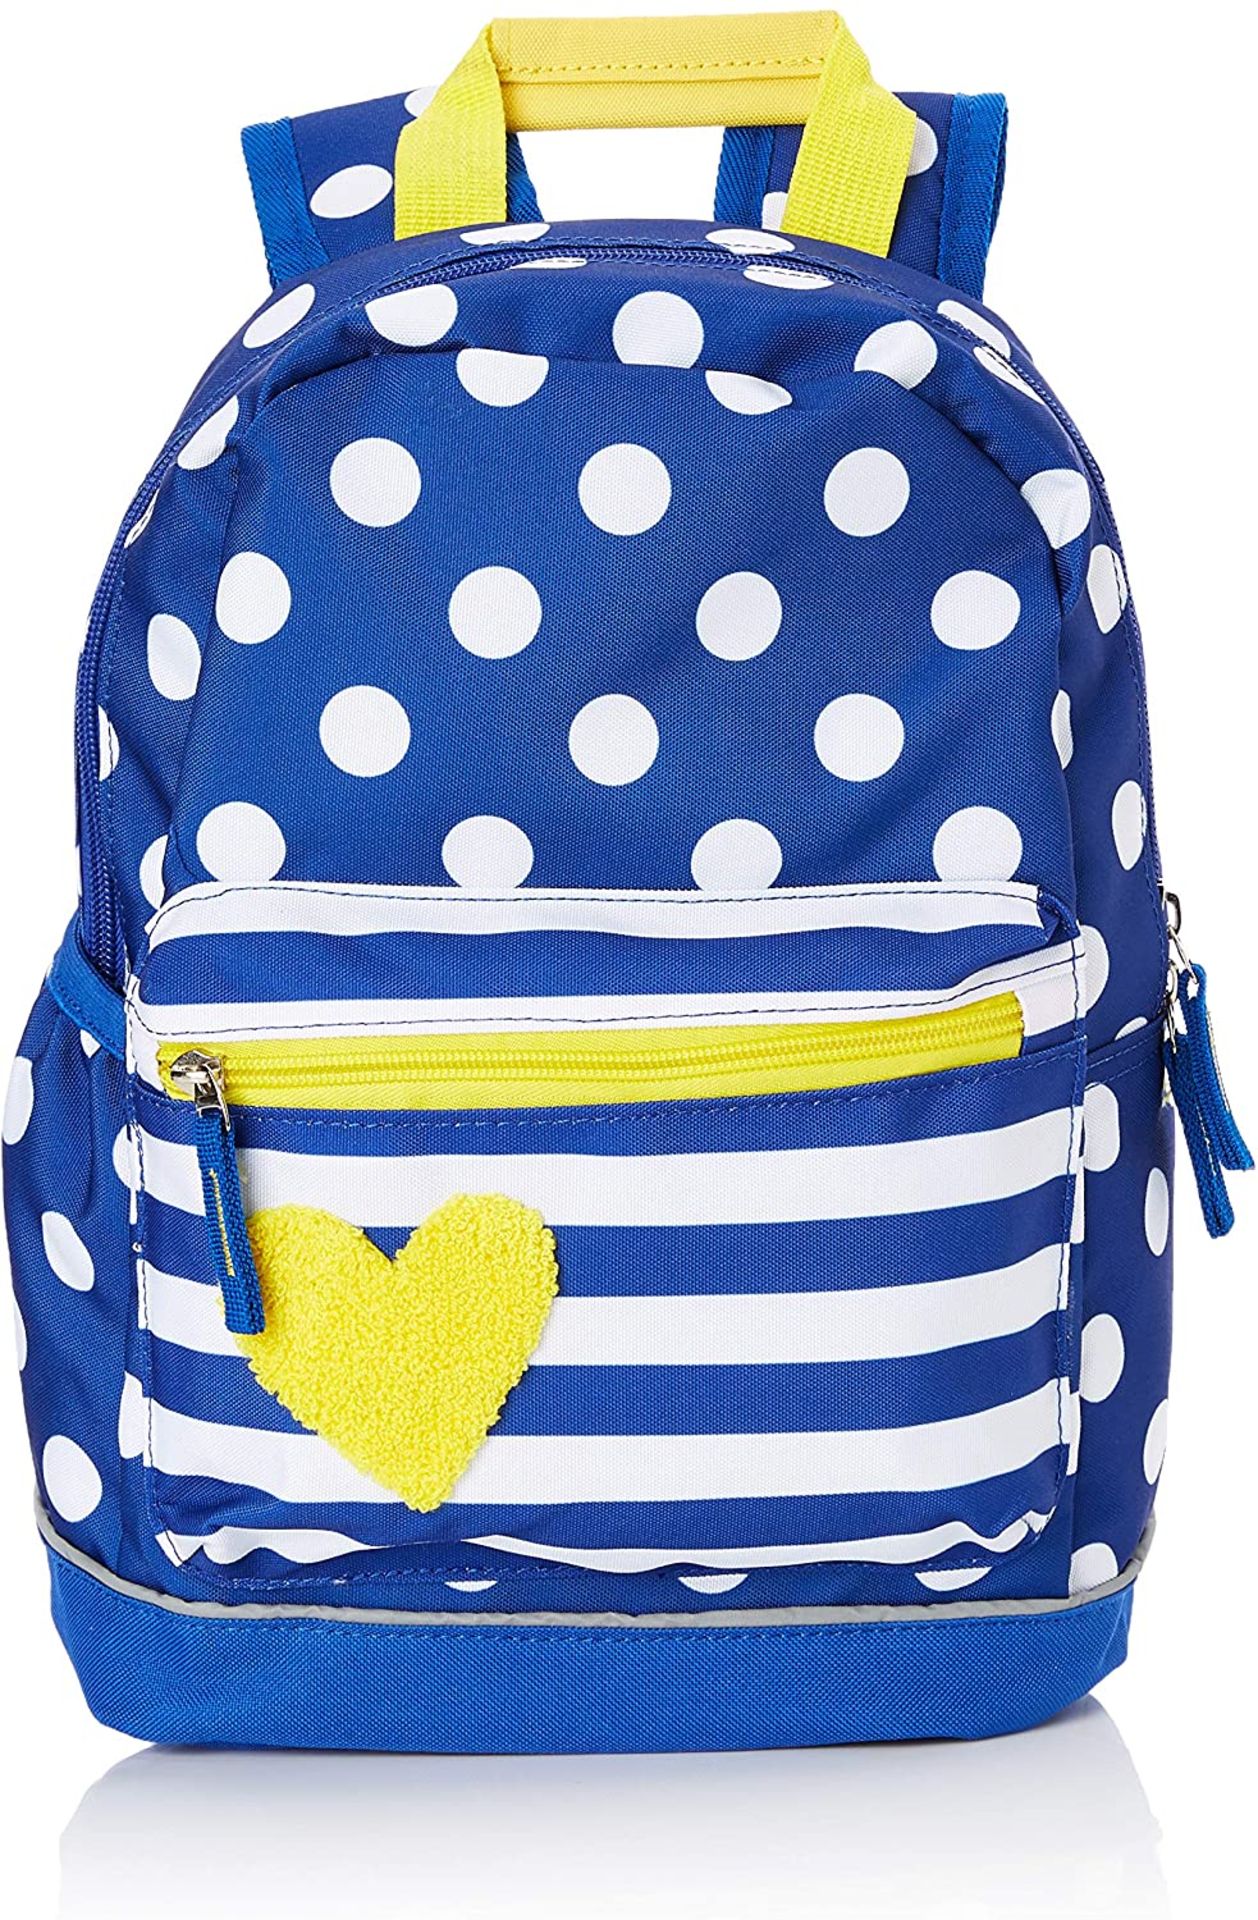 10 x Target Backpack Children Bag Yellow Hart 21996, Multi Colour |3838622219961